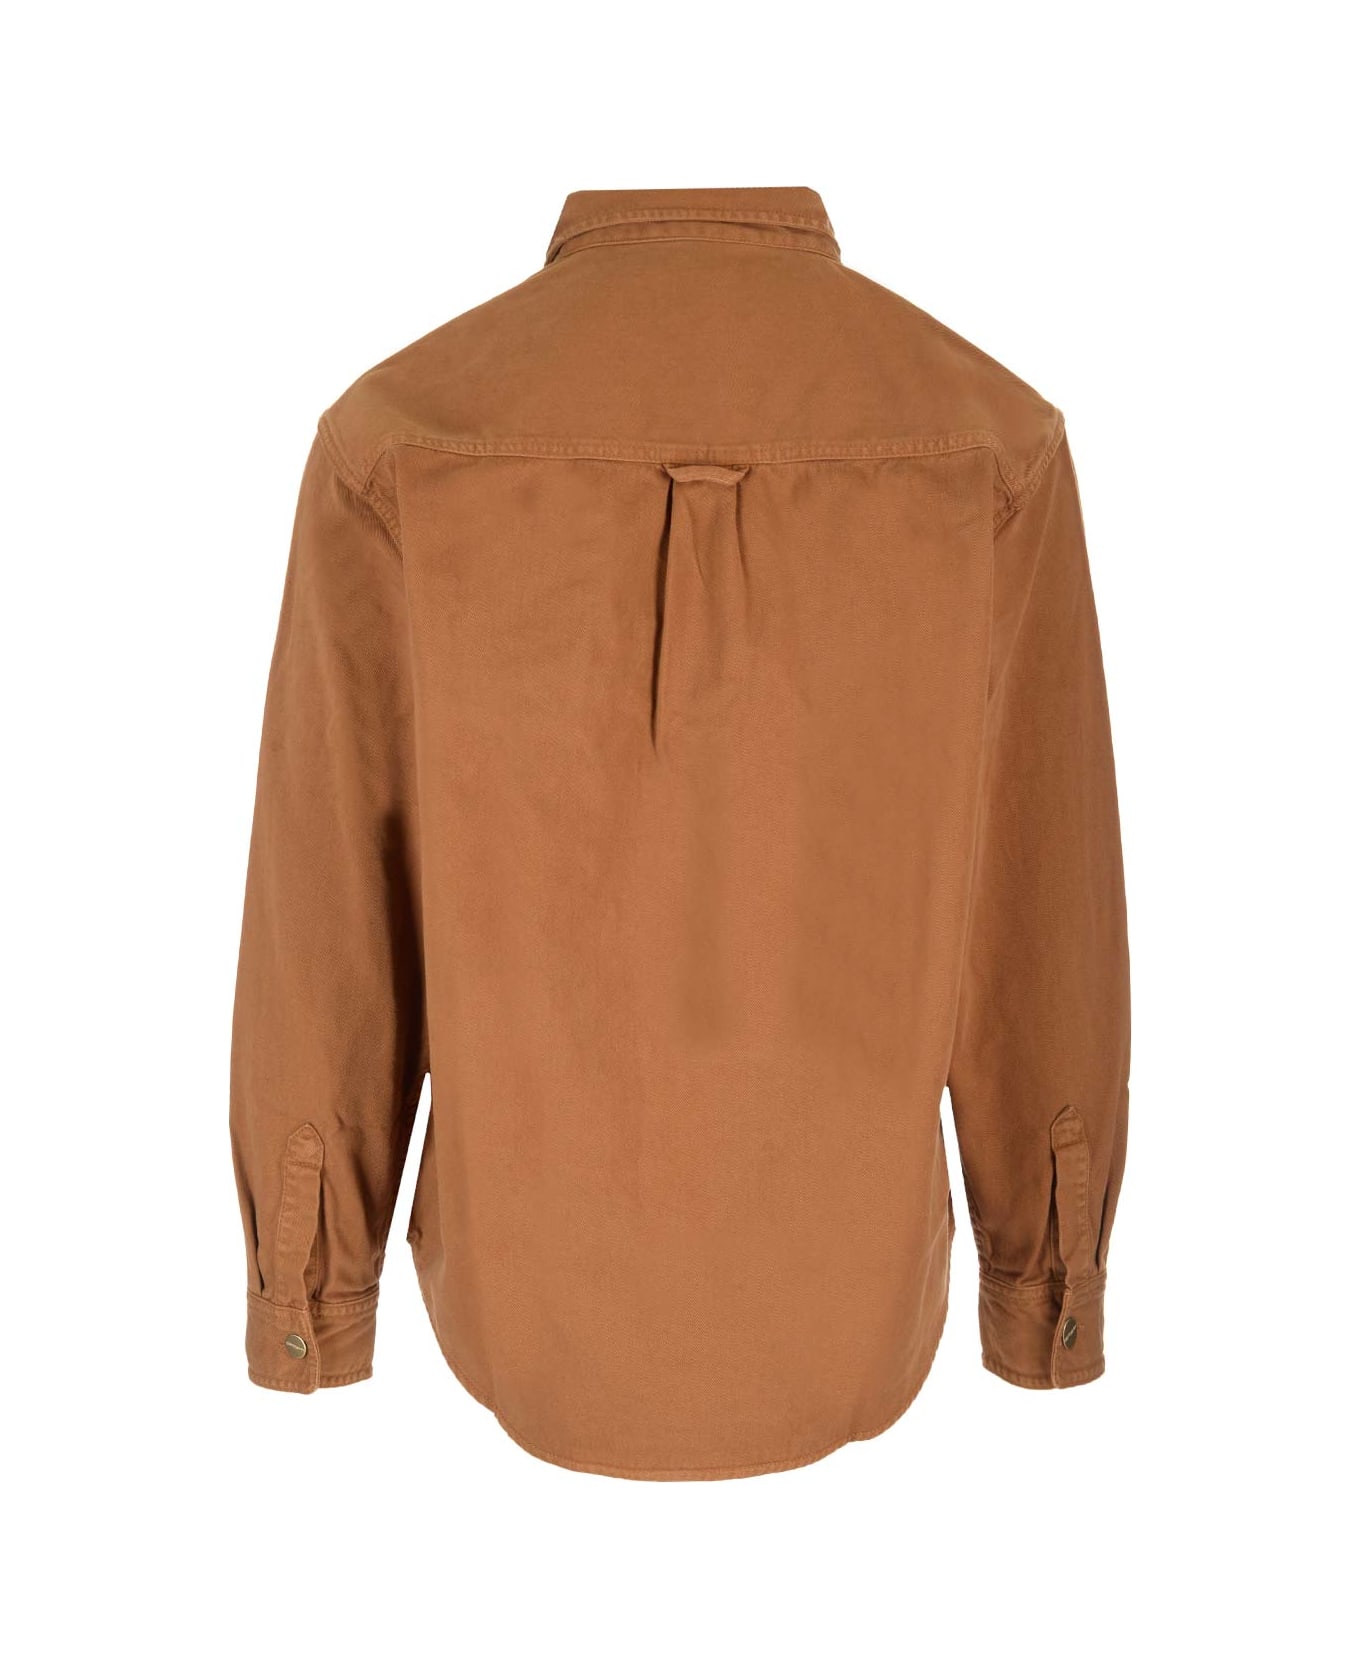 Carhartt Pecan Overshirt - Hzgd Brown Garment